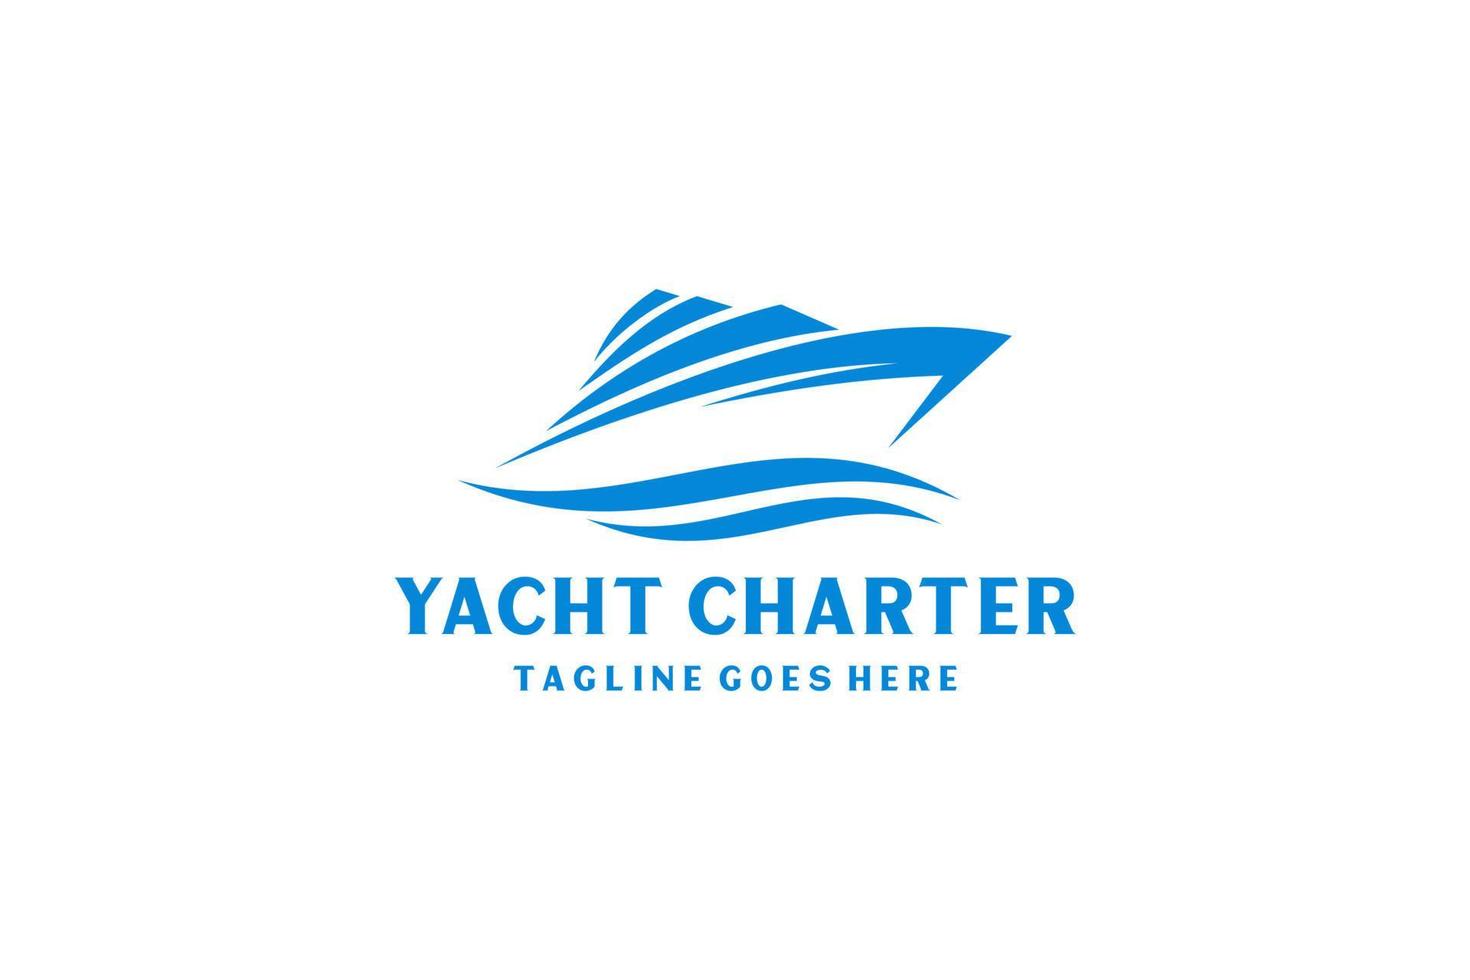 Yacht kryssning logotyp design inspiration med minimalistisk konst stil. vektor